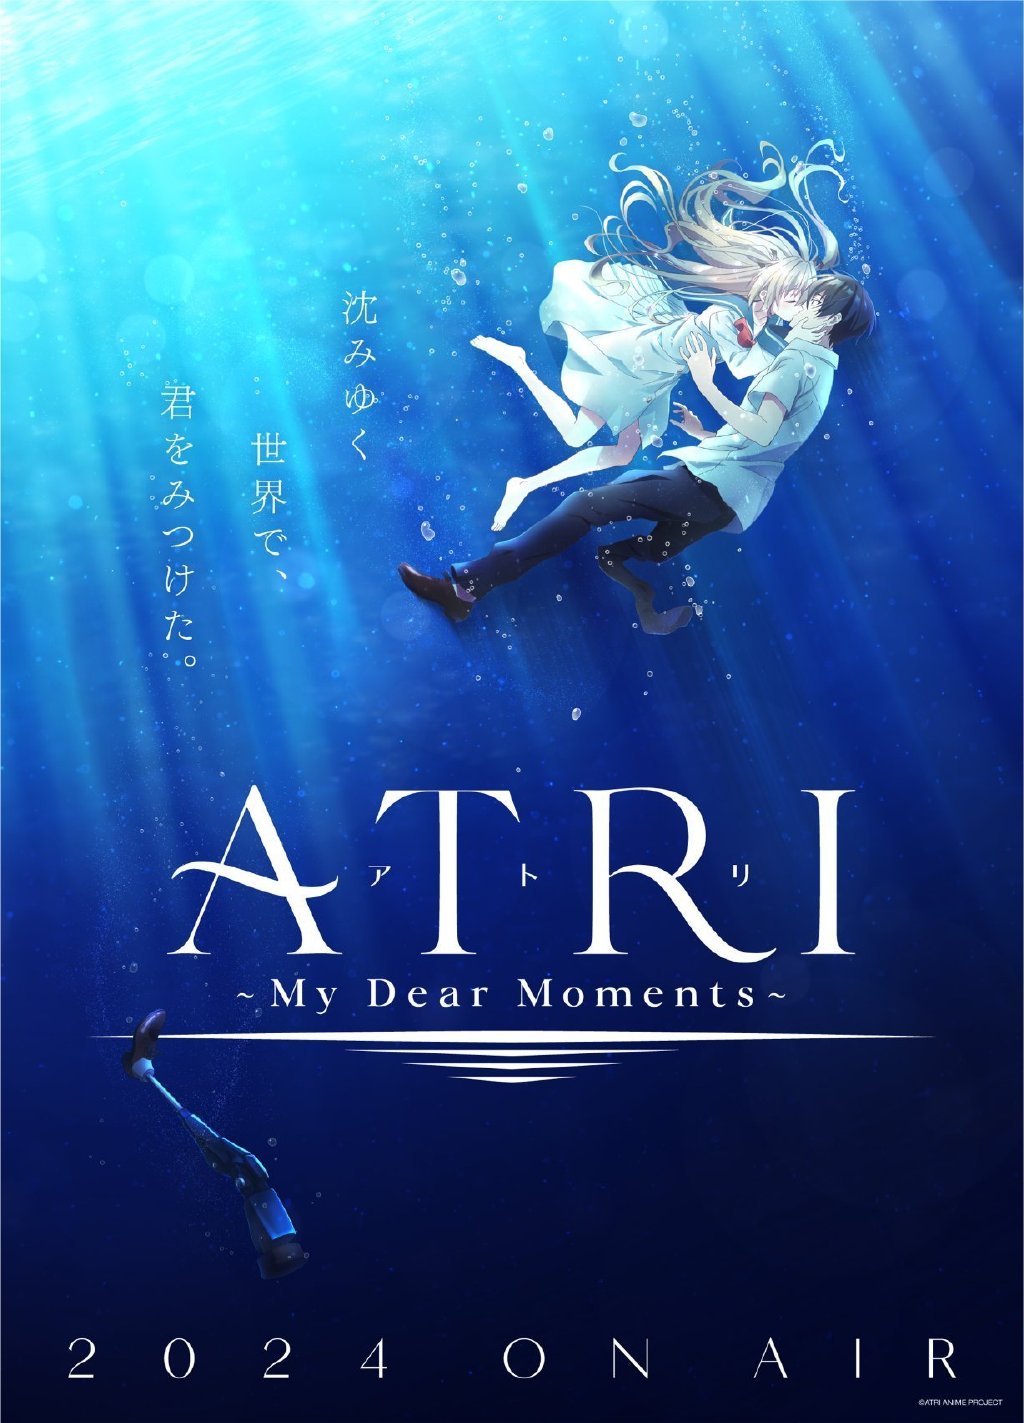 TV动画《ATRI -My Dear Moments- / 亚托莉 -我挚爱的时光-》先导视觉图公开，2024年播出插图icecomic动漫-云之彼端,约定的地方(´･ᴗ･`)1